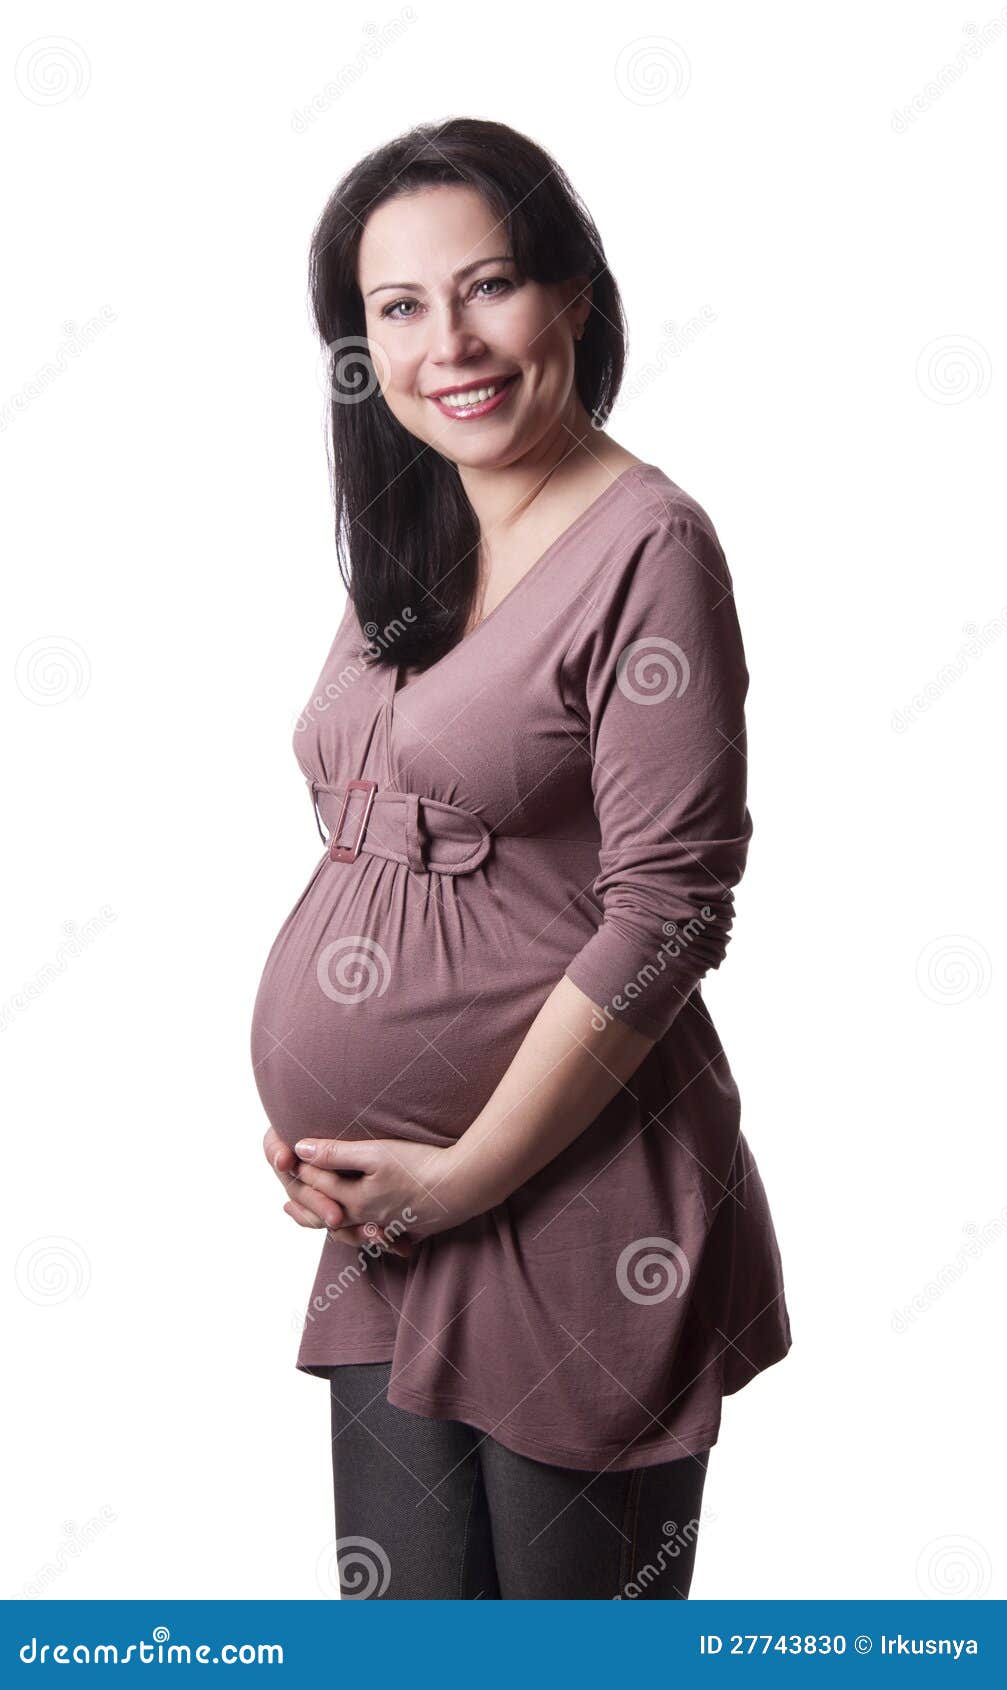 Adult Pregnancy 108